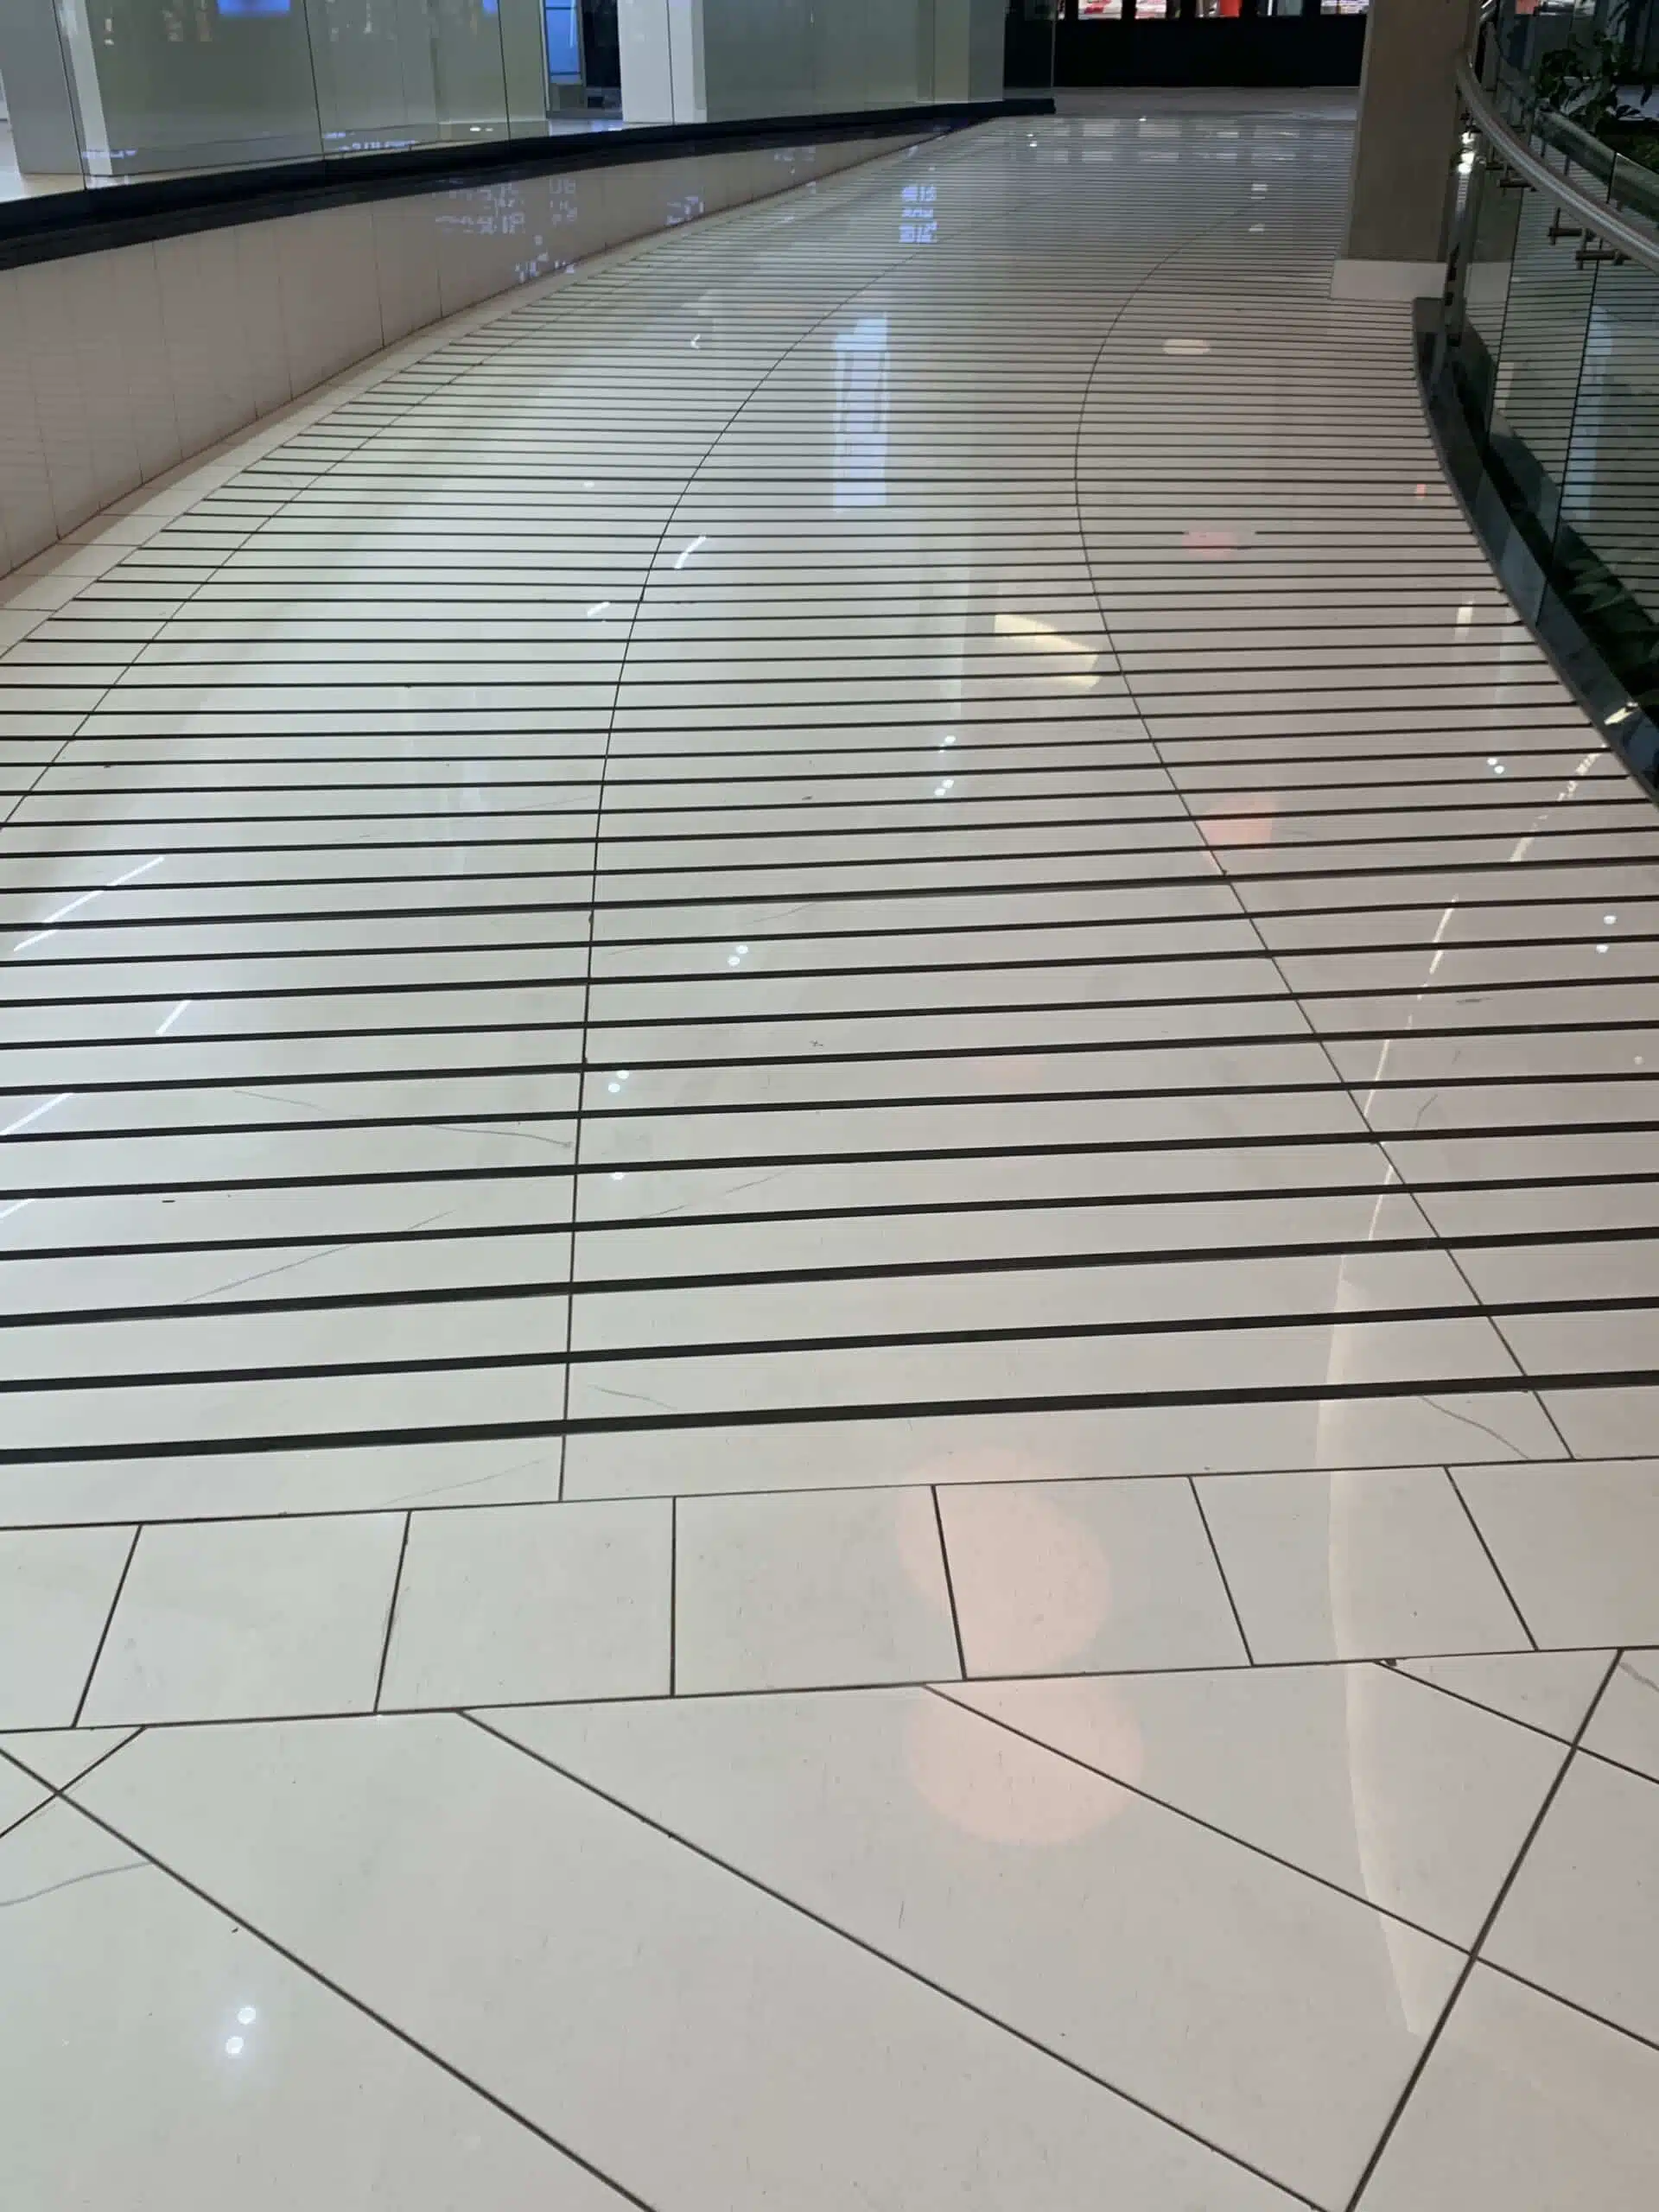 Anti-Slip flooring in shopping mall